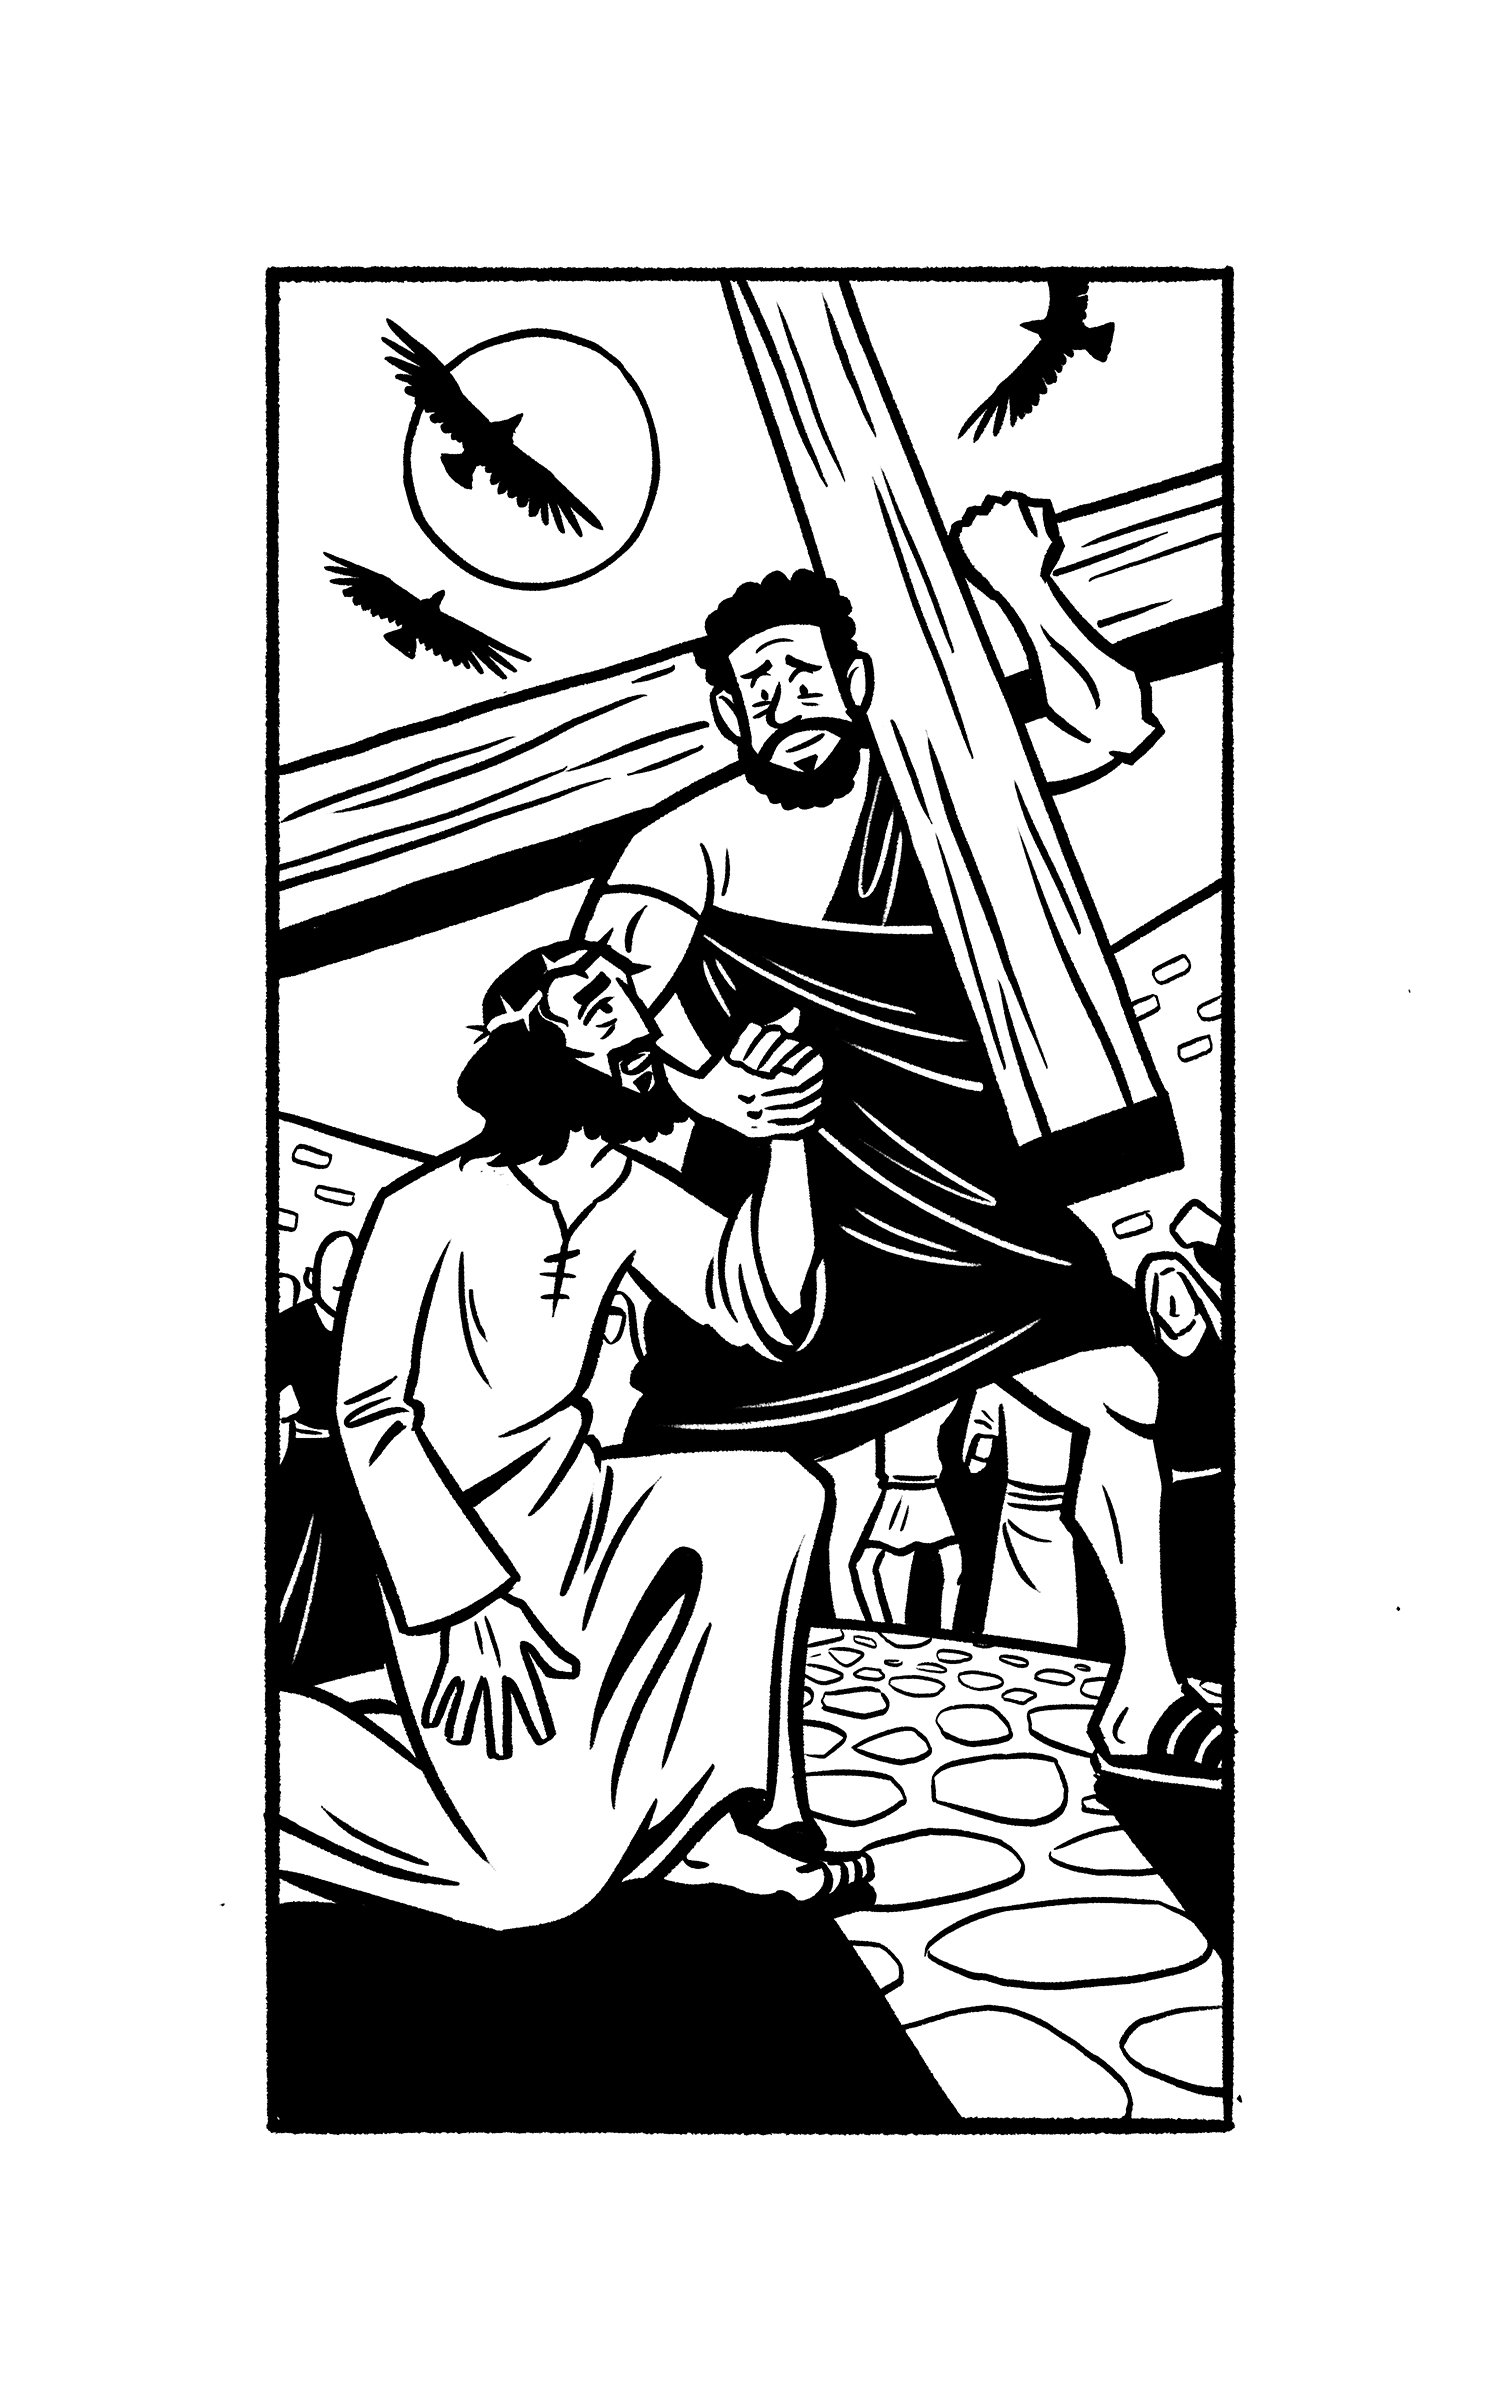 Simon of Cyrene helps Jesus to carry his cross